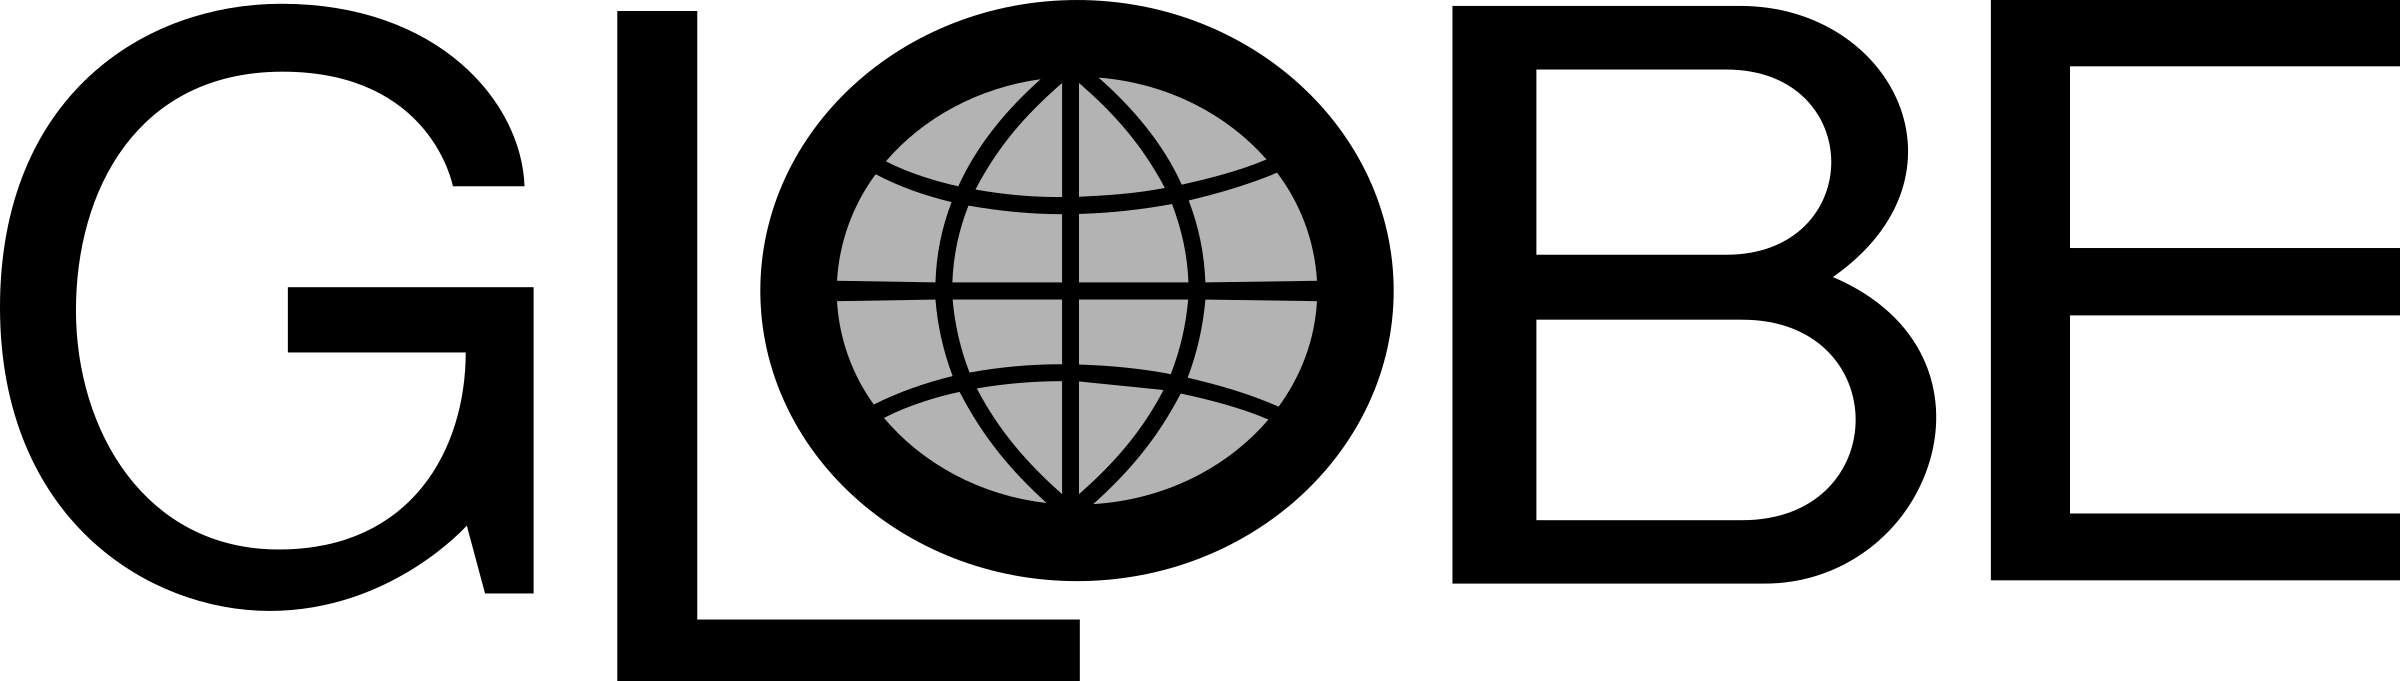 Black Globe Logo - Globe Logo PNG Transparent & SVG Vector - Freebie Supply